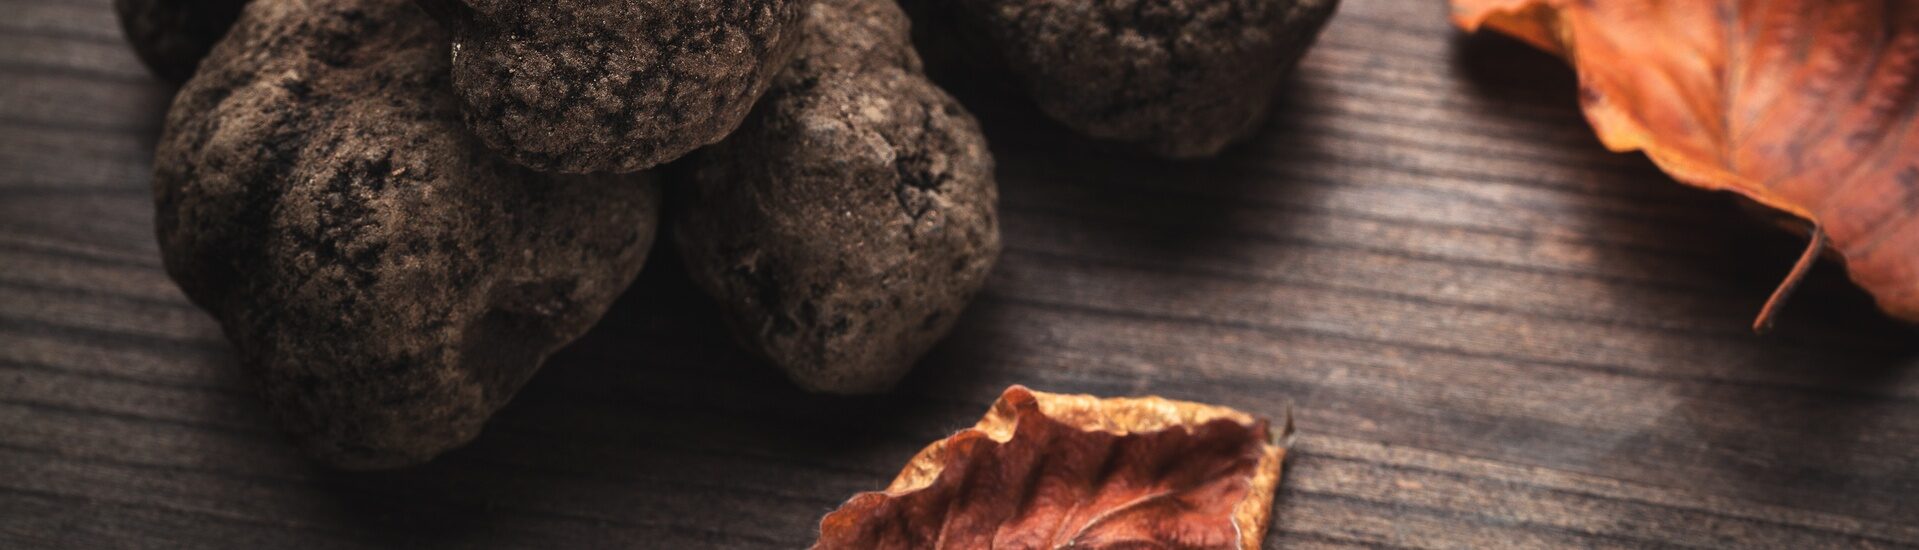 French selling Spanish truffles